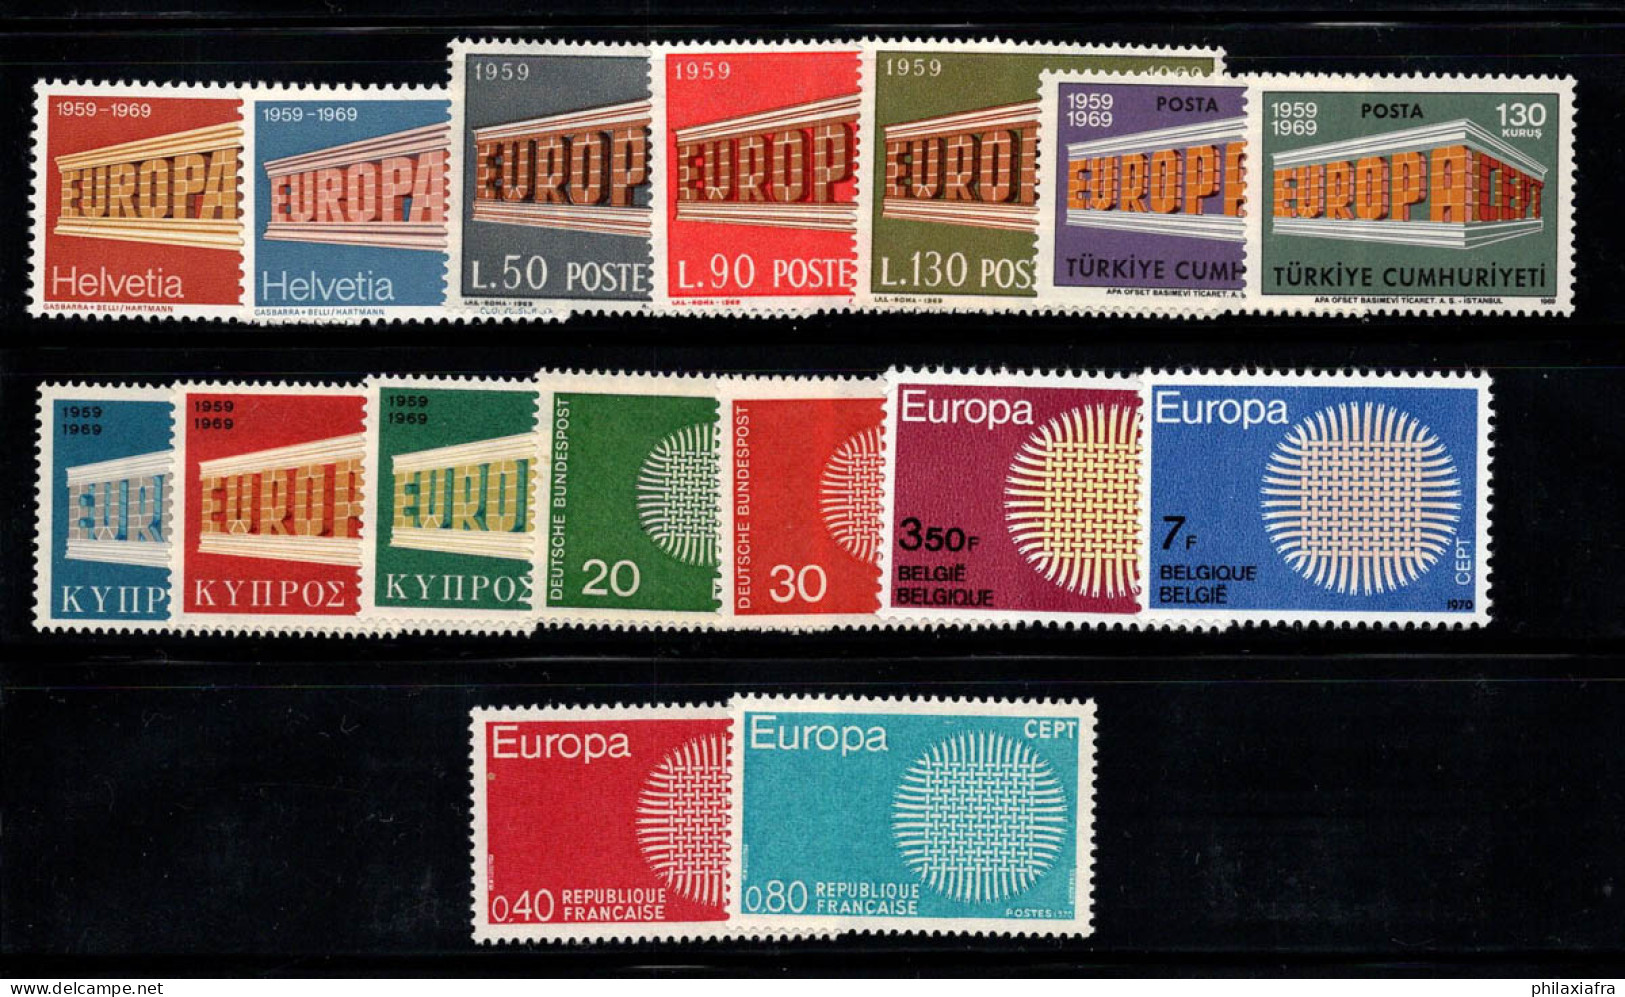 Europe CPET 1969 Neuf ** 100% Turquie, France, Belgique - 1969